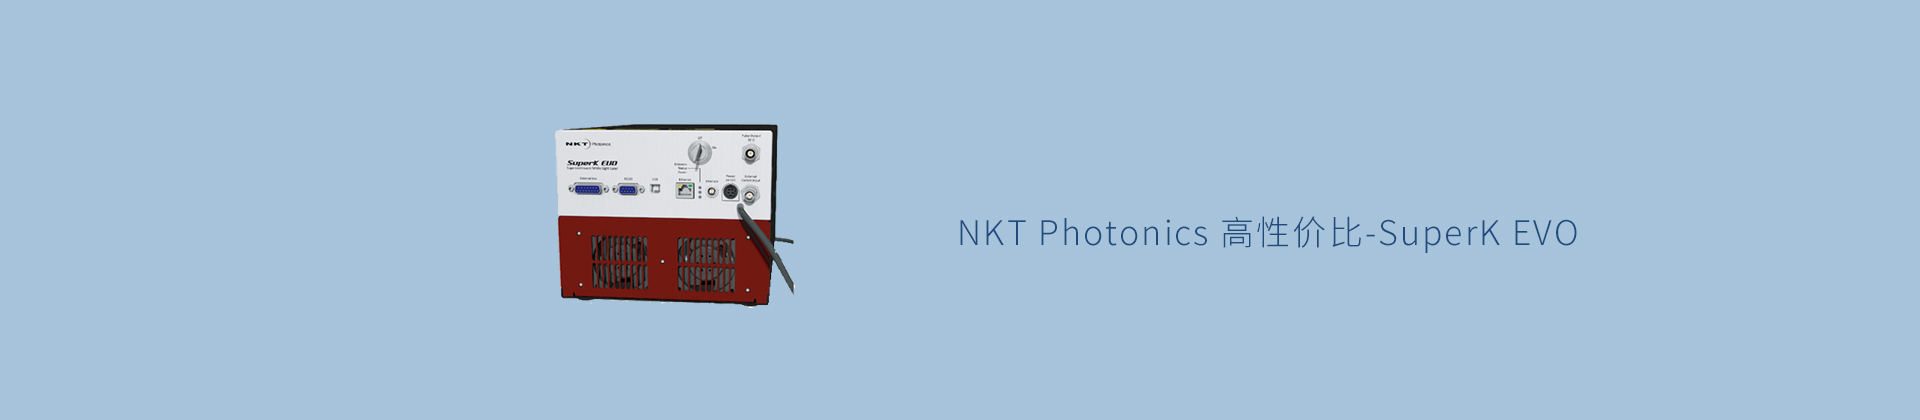 NKT Photonics 高性价比-SuperK EVO